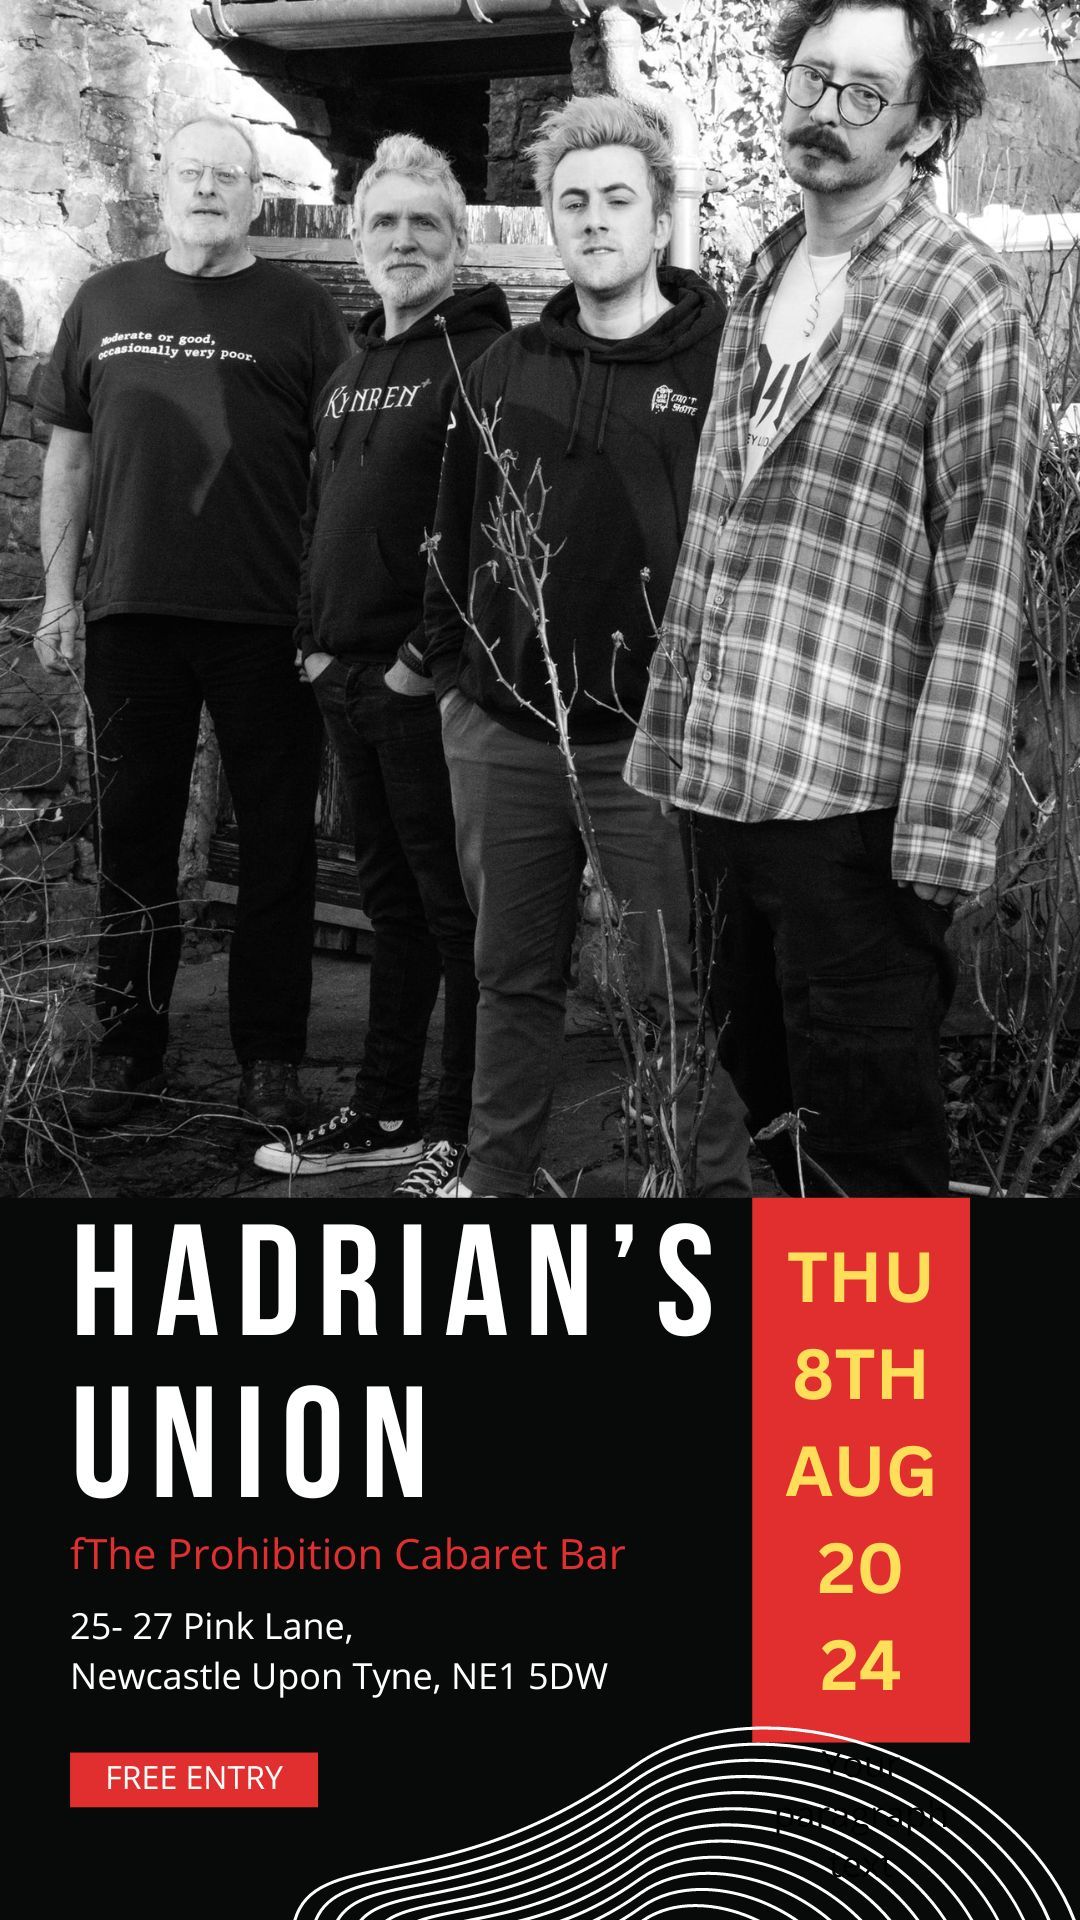 Hadrian's Union Live at the Prohibition Cabaret Bar